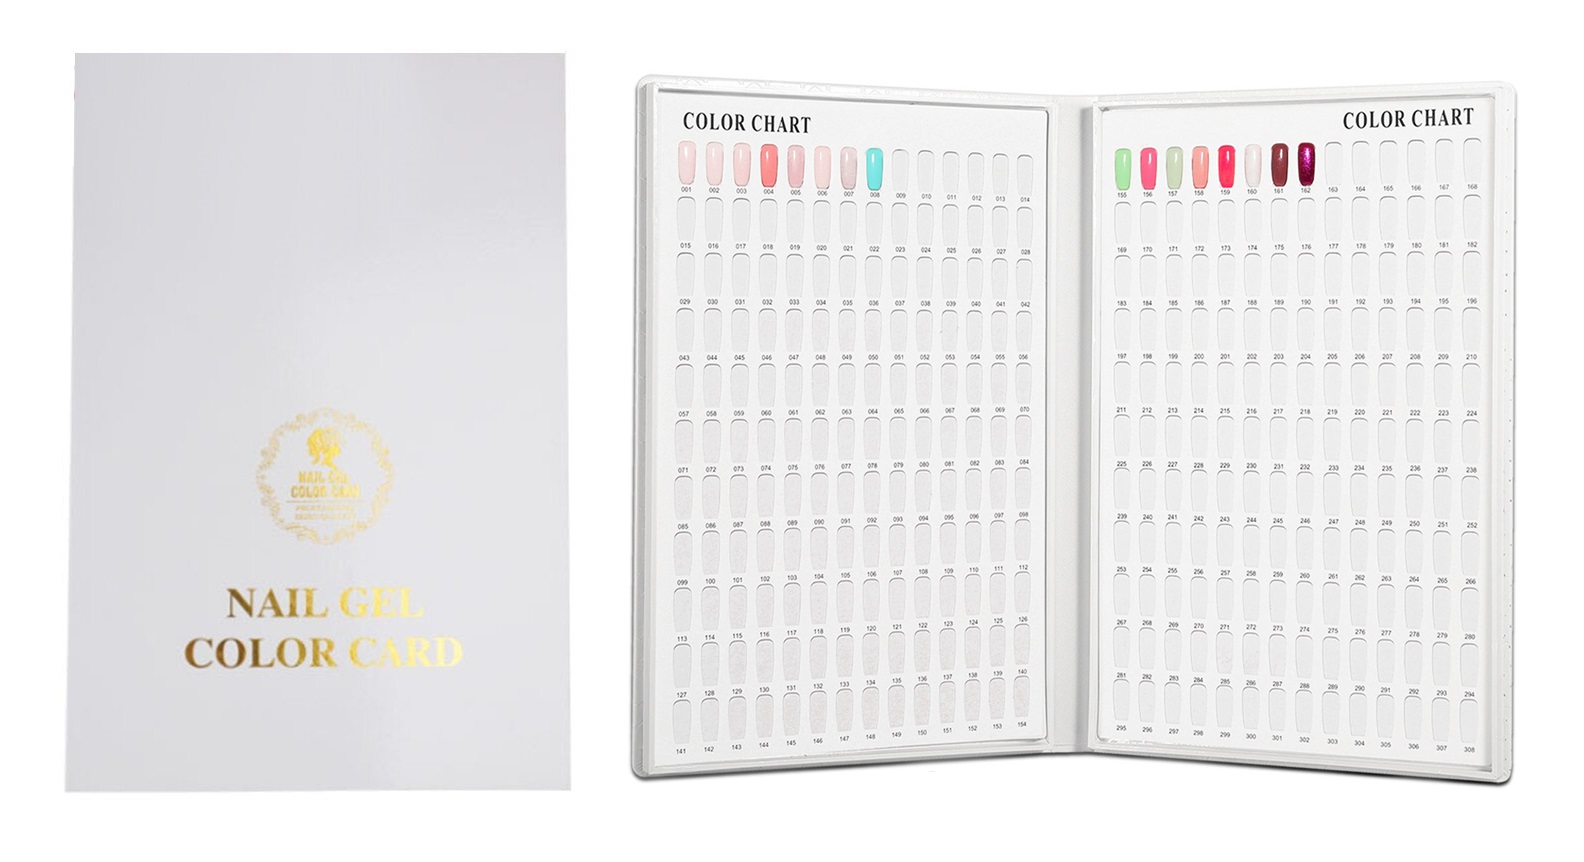 Книжка-палитра для гель-лаков BYFASHION Nail Gel Color Card 308 ячеек